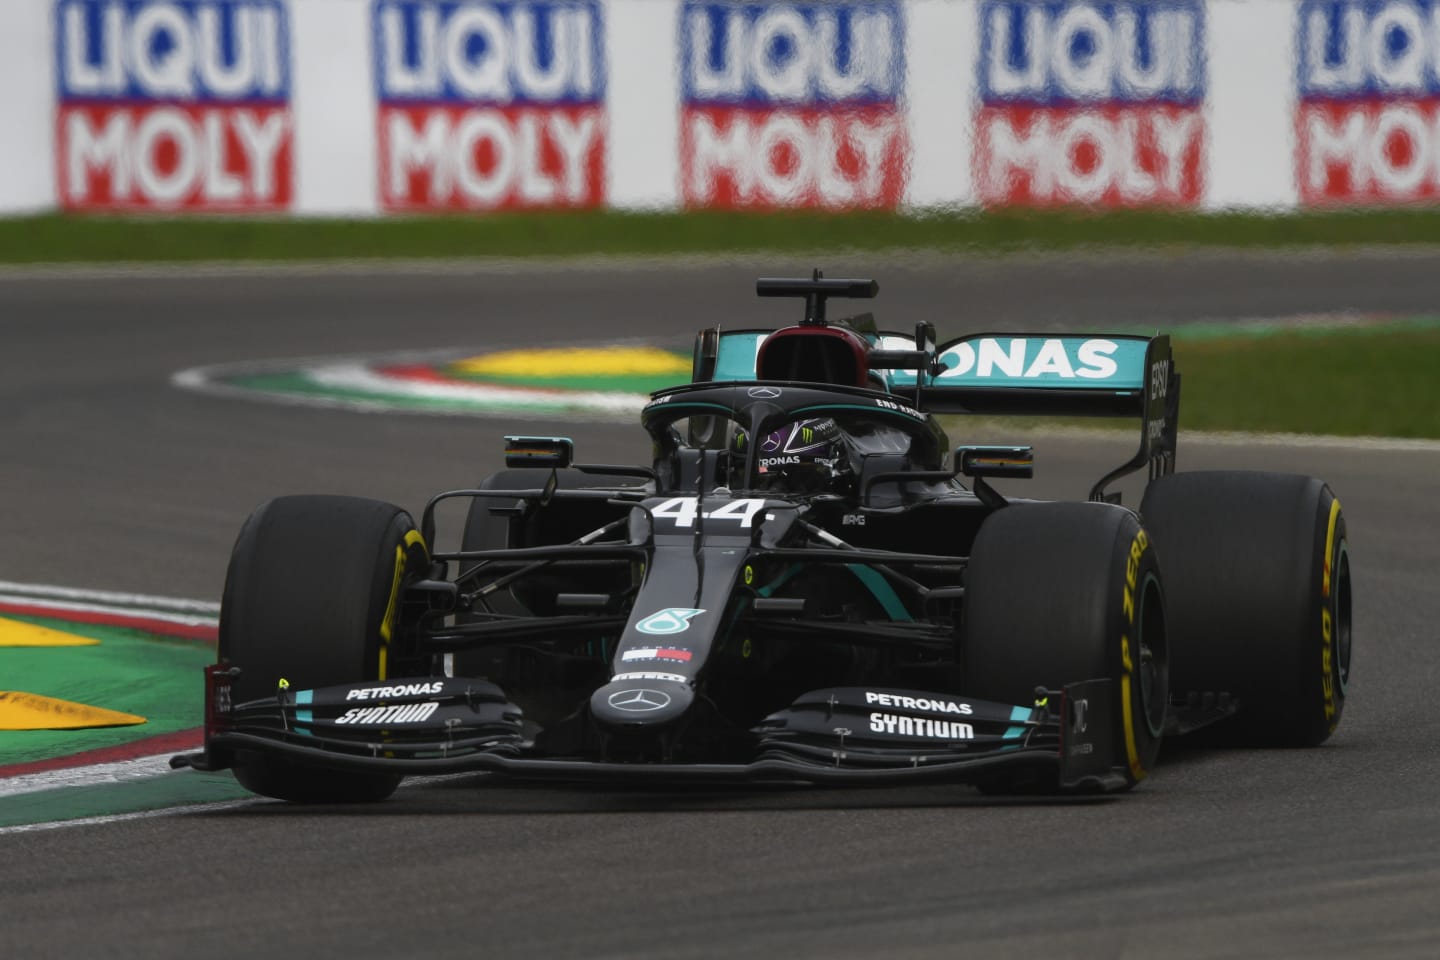 IMOLA, ITALY - NOVEMBER 01: Lewis Hamilton of Great Britain driving the (44) Mercedes AMG Petronas